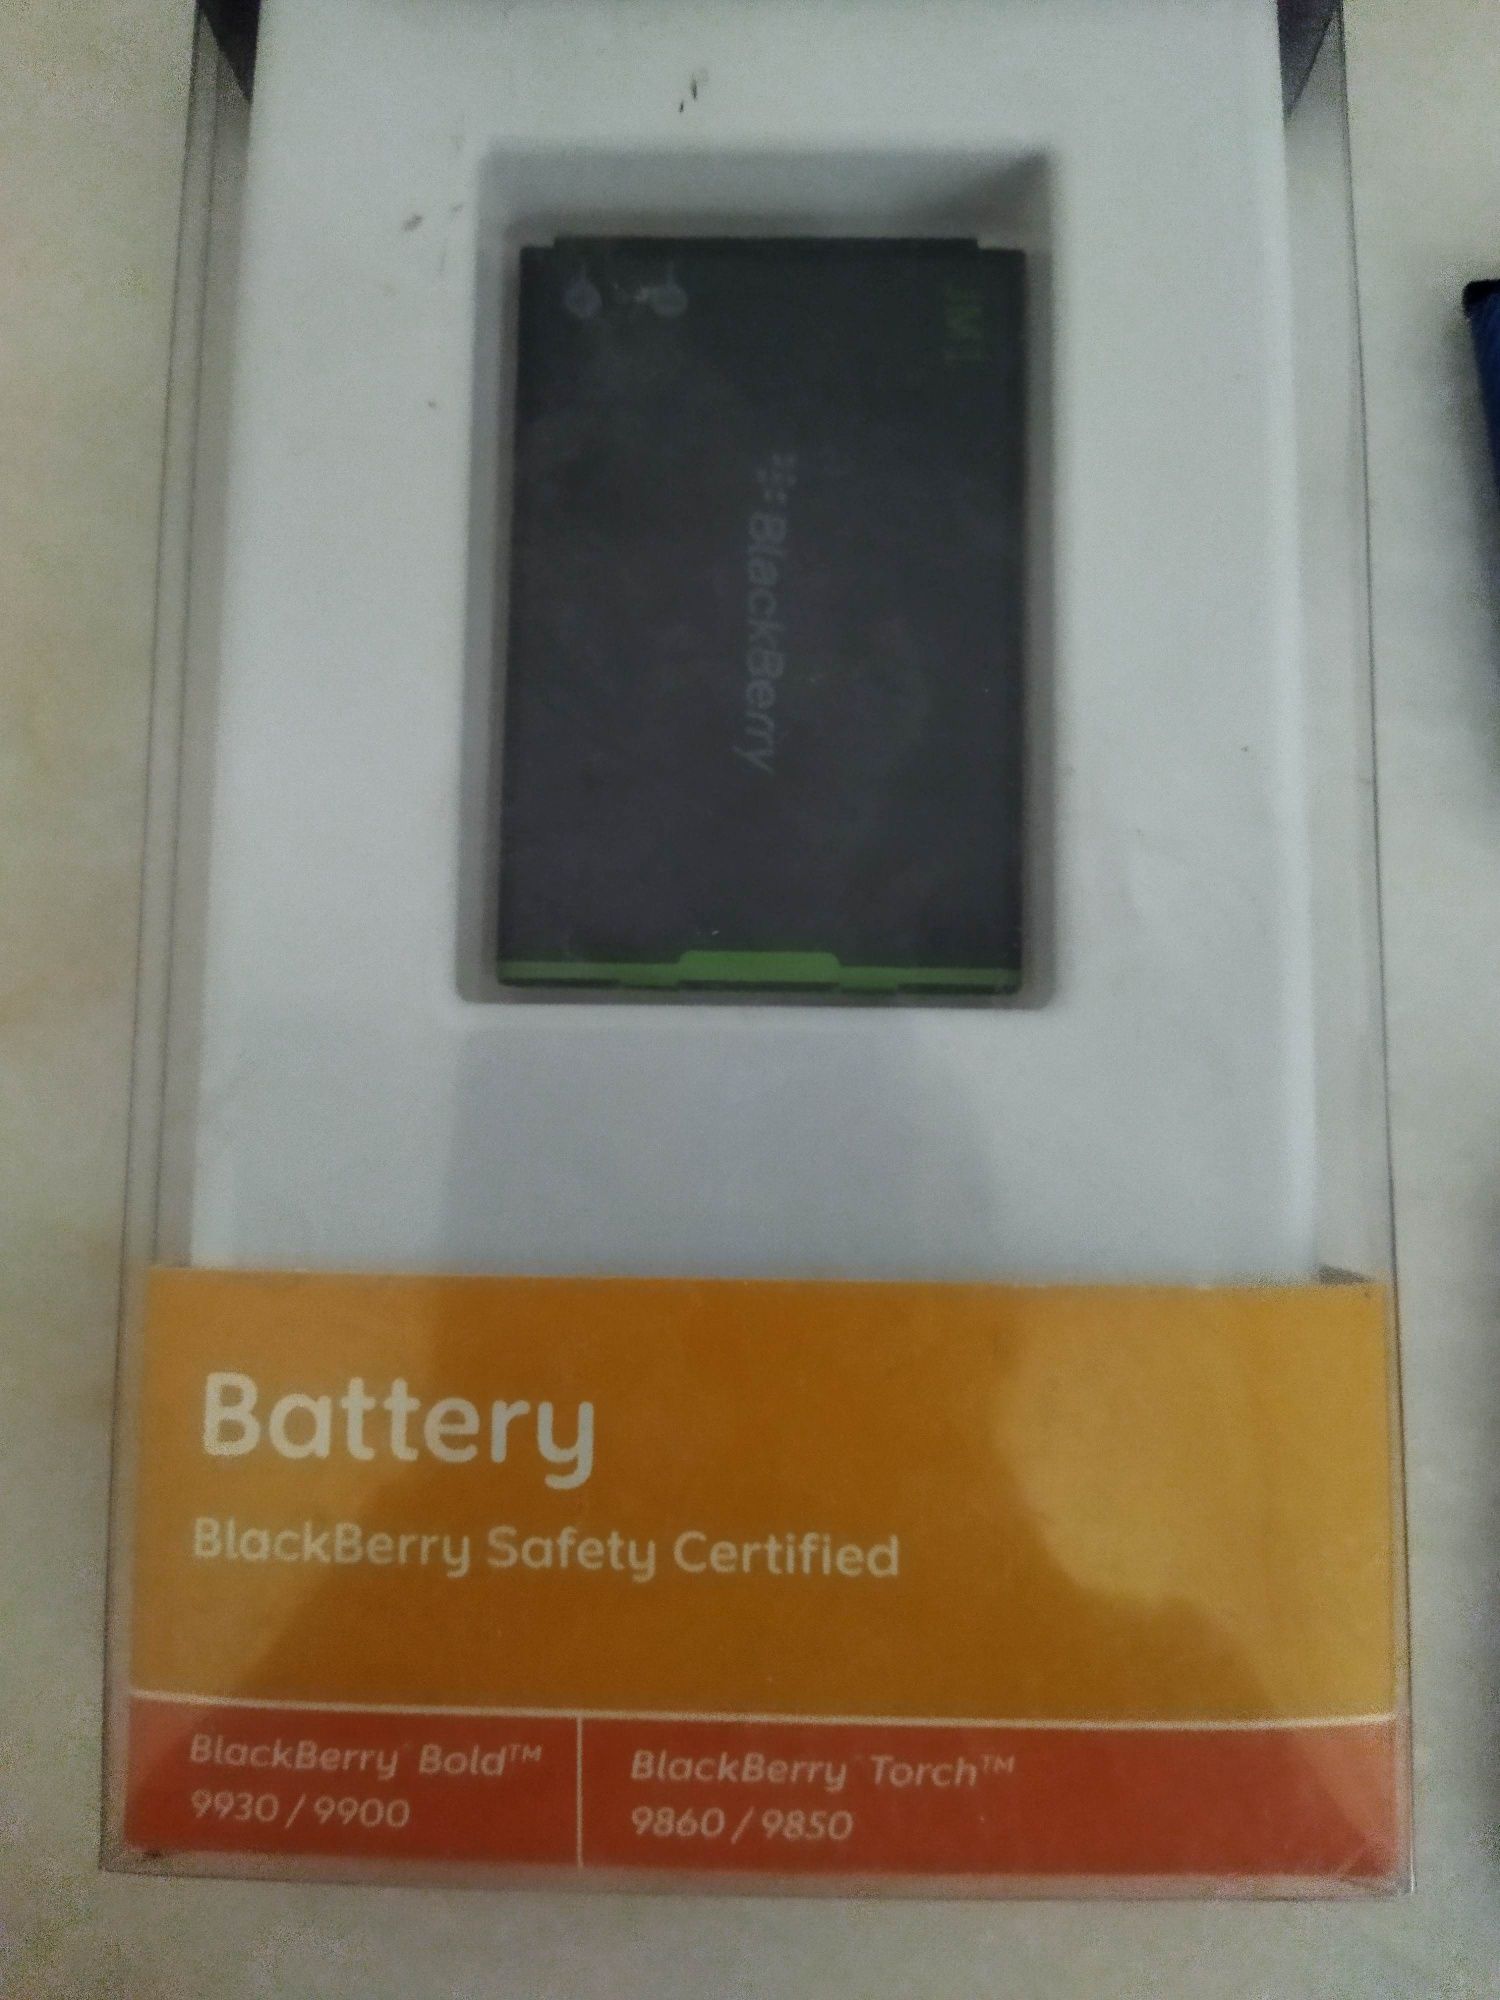 Baterias Nokia, 3310, 3330, N95, Blackberry,etc